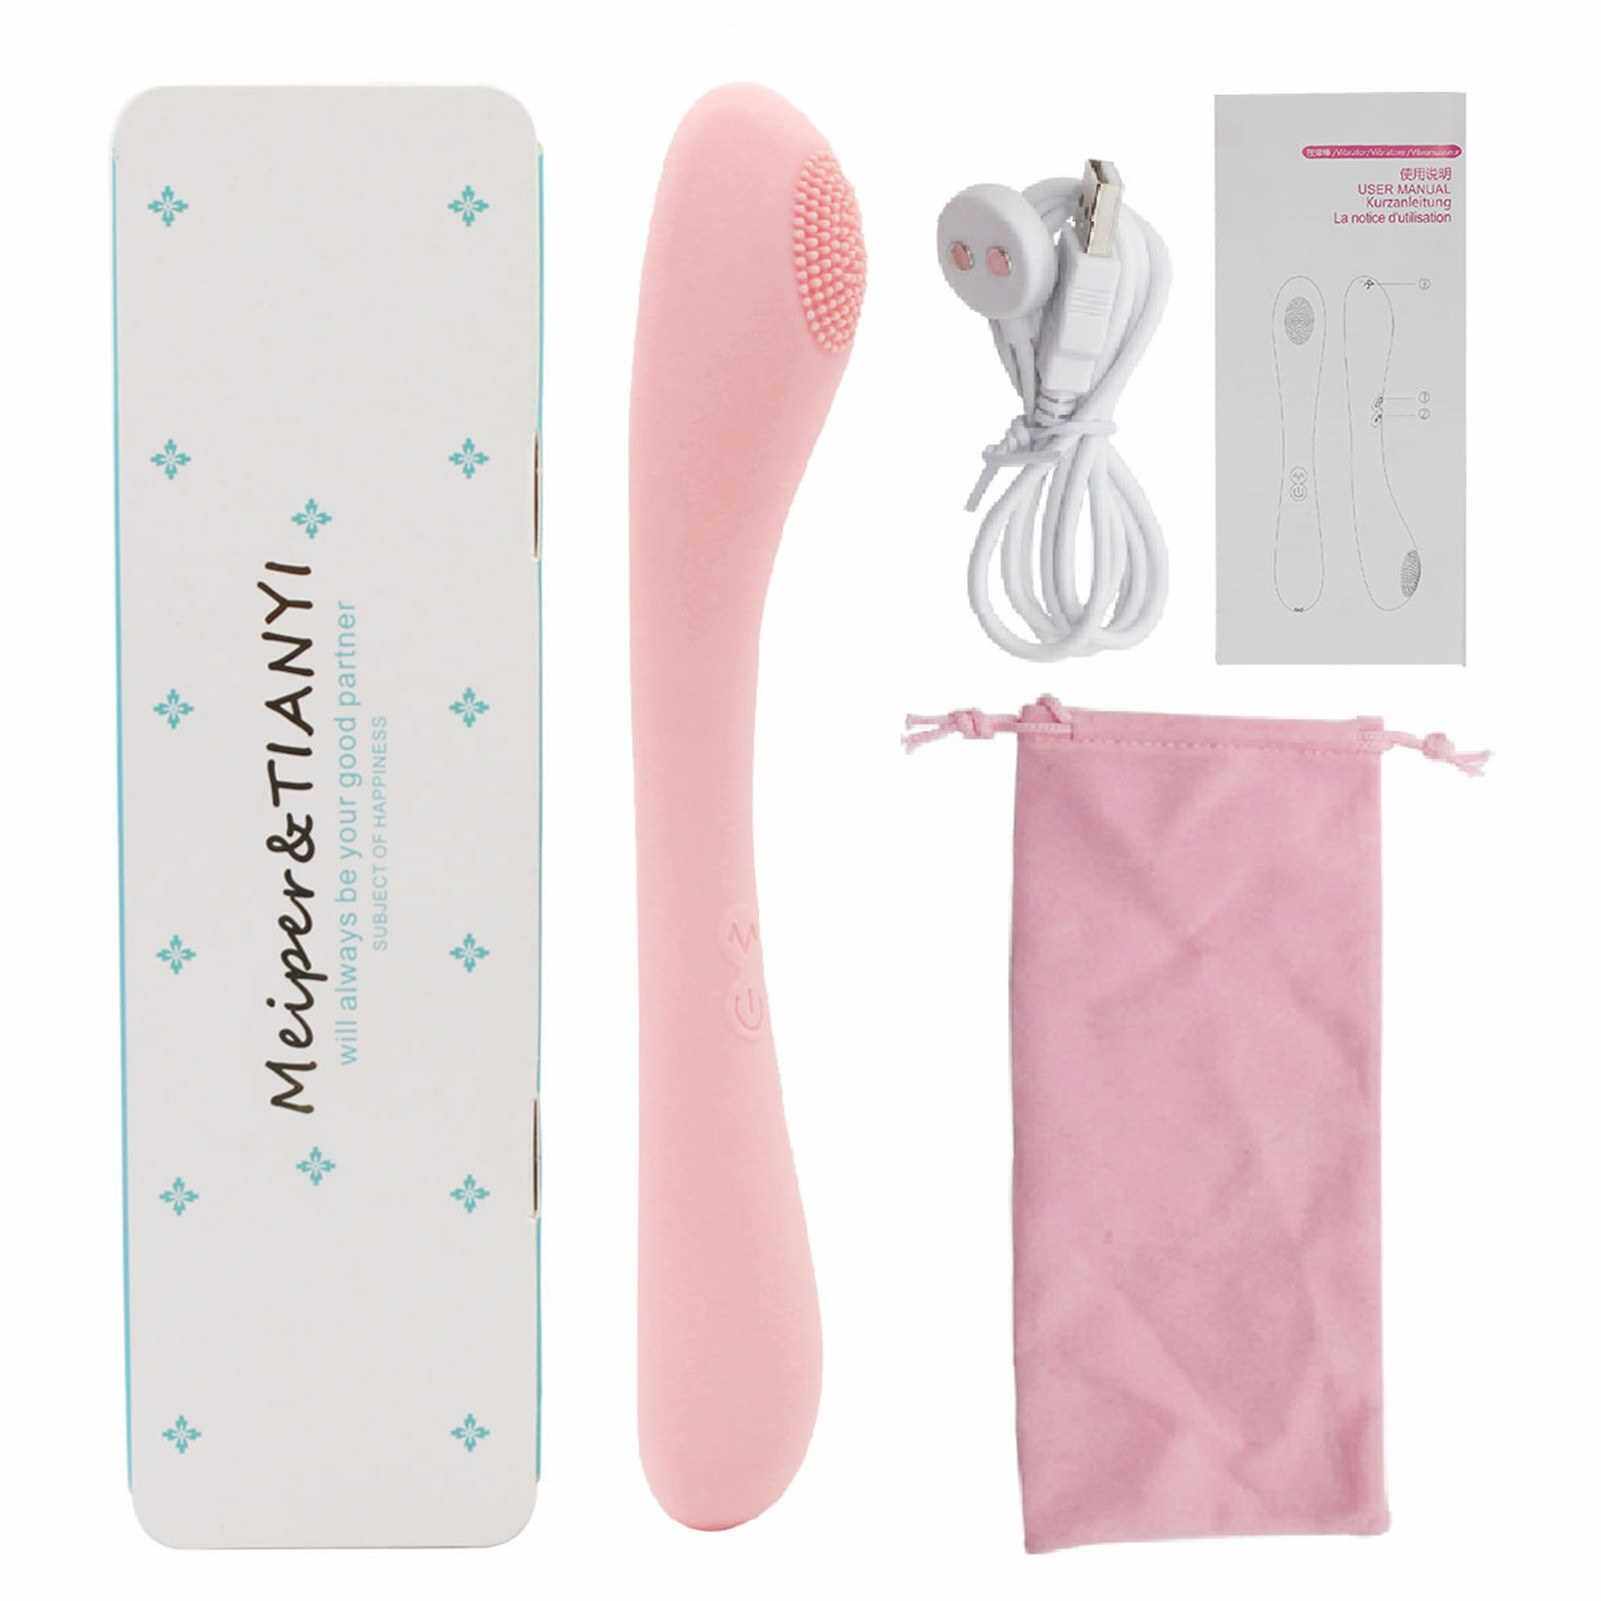 Handheld Vibrator Massager Massage Grain Sexual Excitement Toy for Women (Standard)